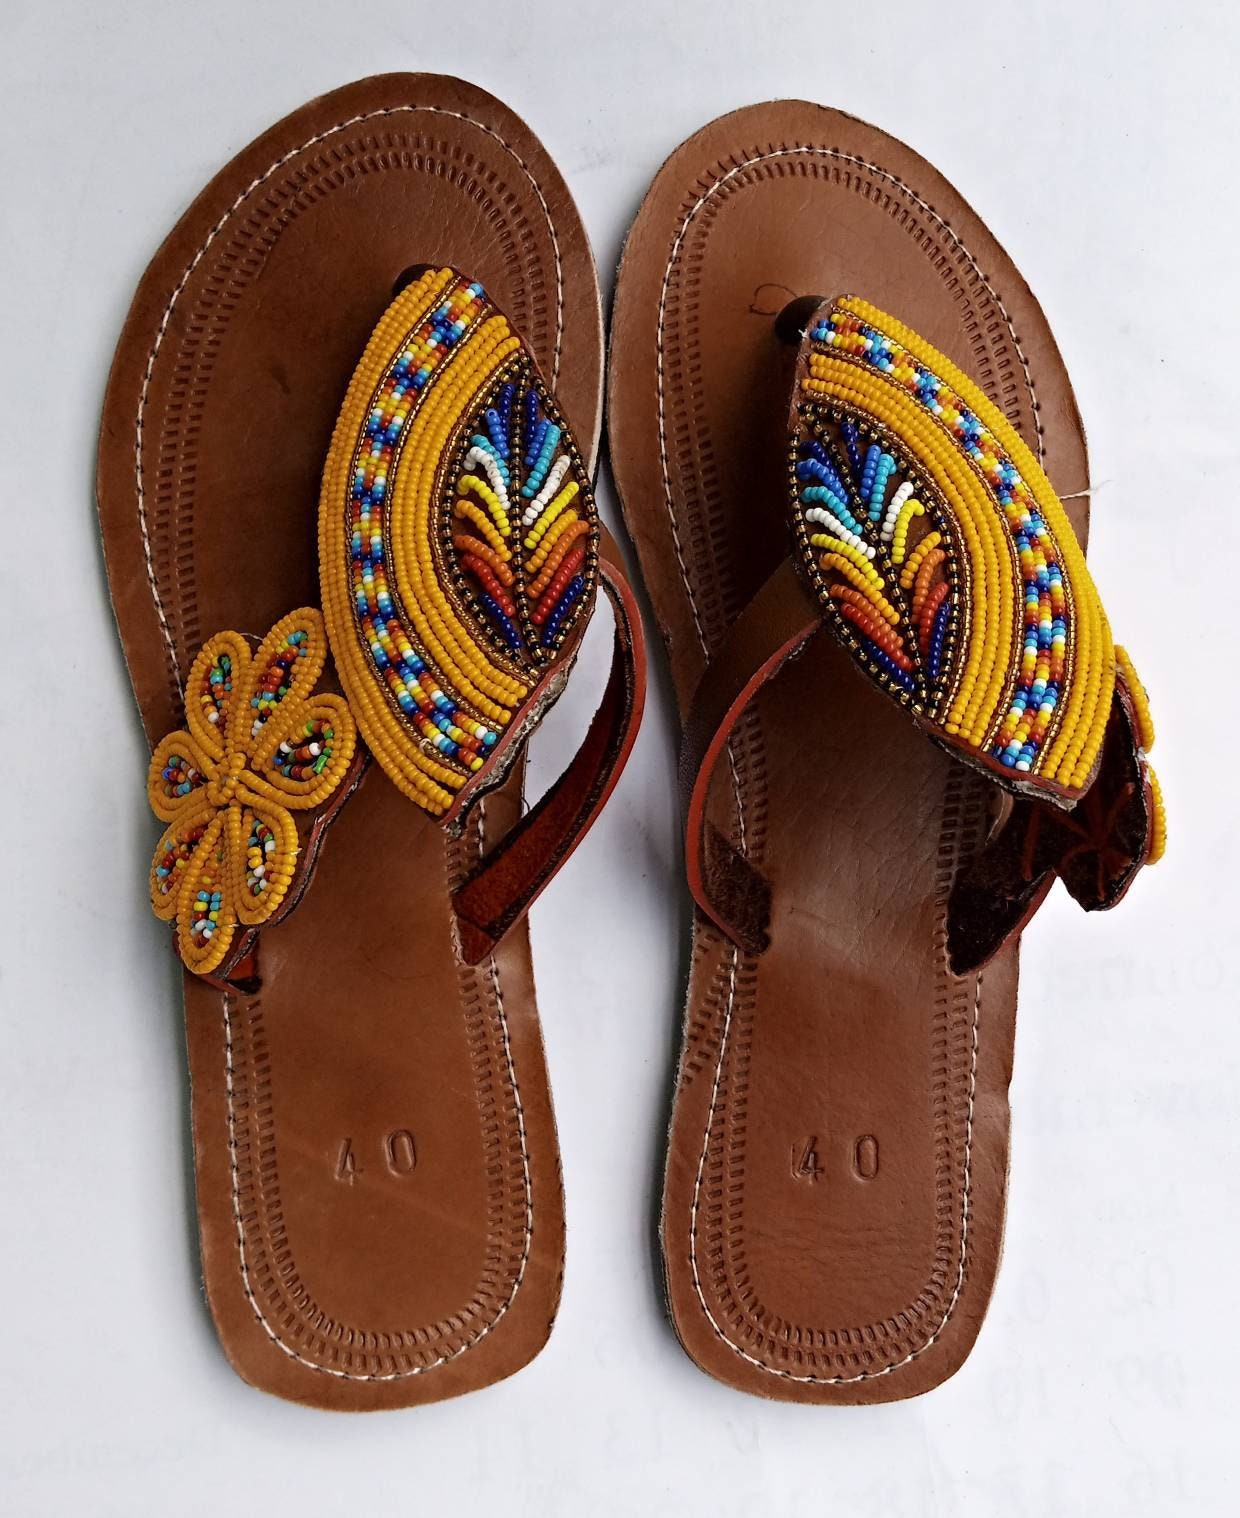 ON SALE Summer Sandals Leather Sandals Tribal Sandals - Etsy